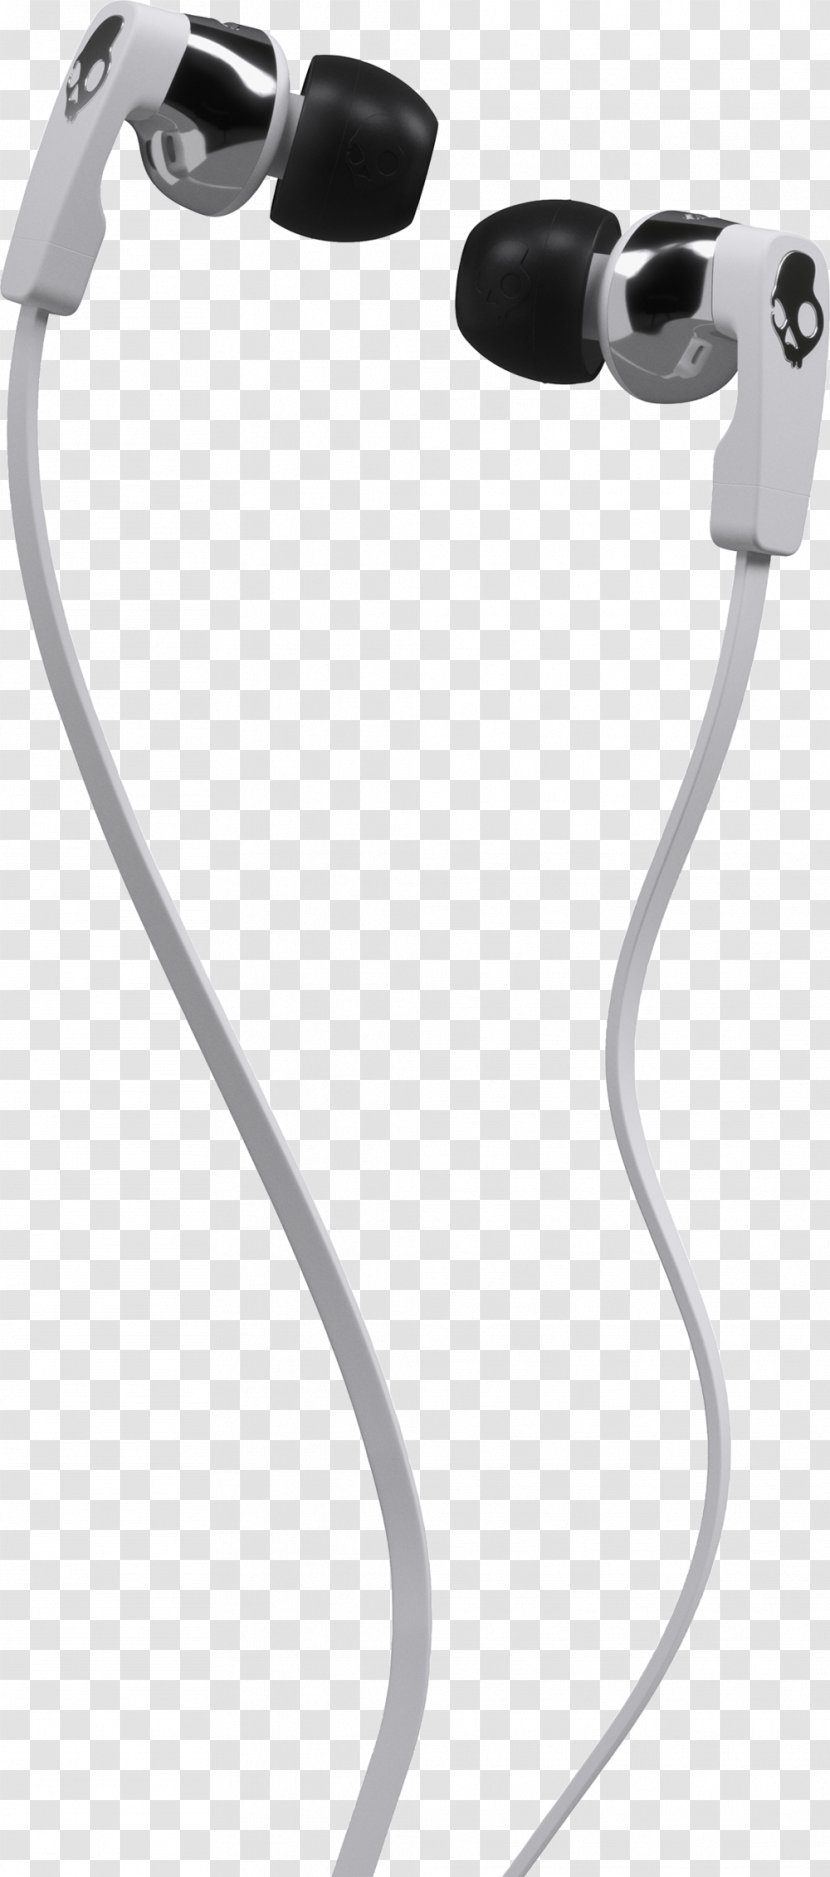 Headphones Microphone Skullcandy Strum Headset - Hearing Aid Transparent PNG